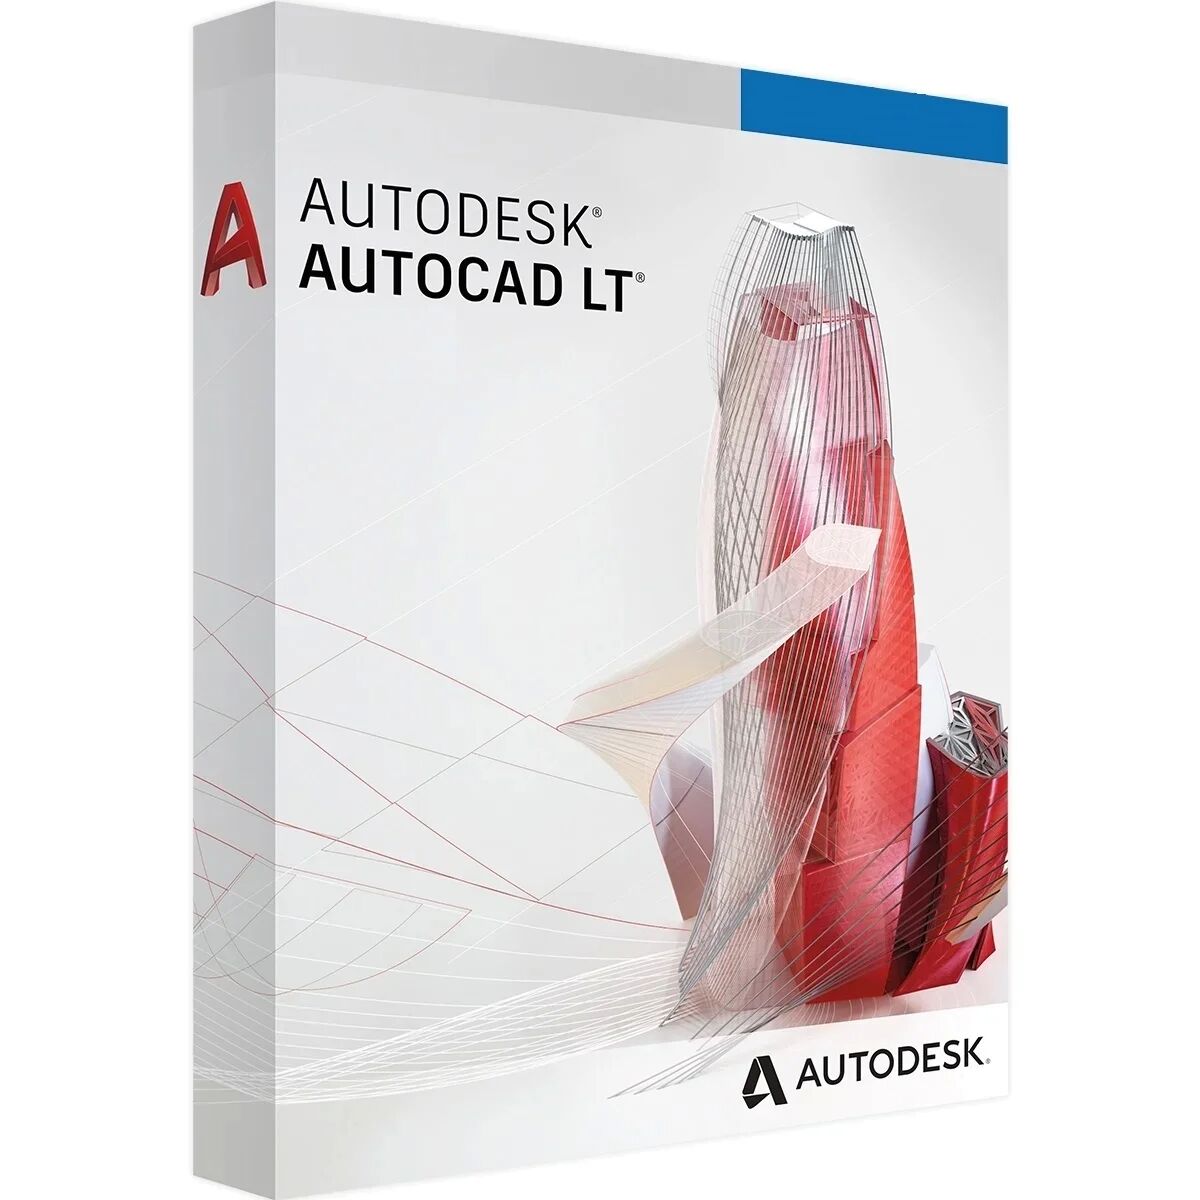 Autodesk AutoCAD LT for Mac Renewal